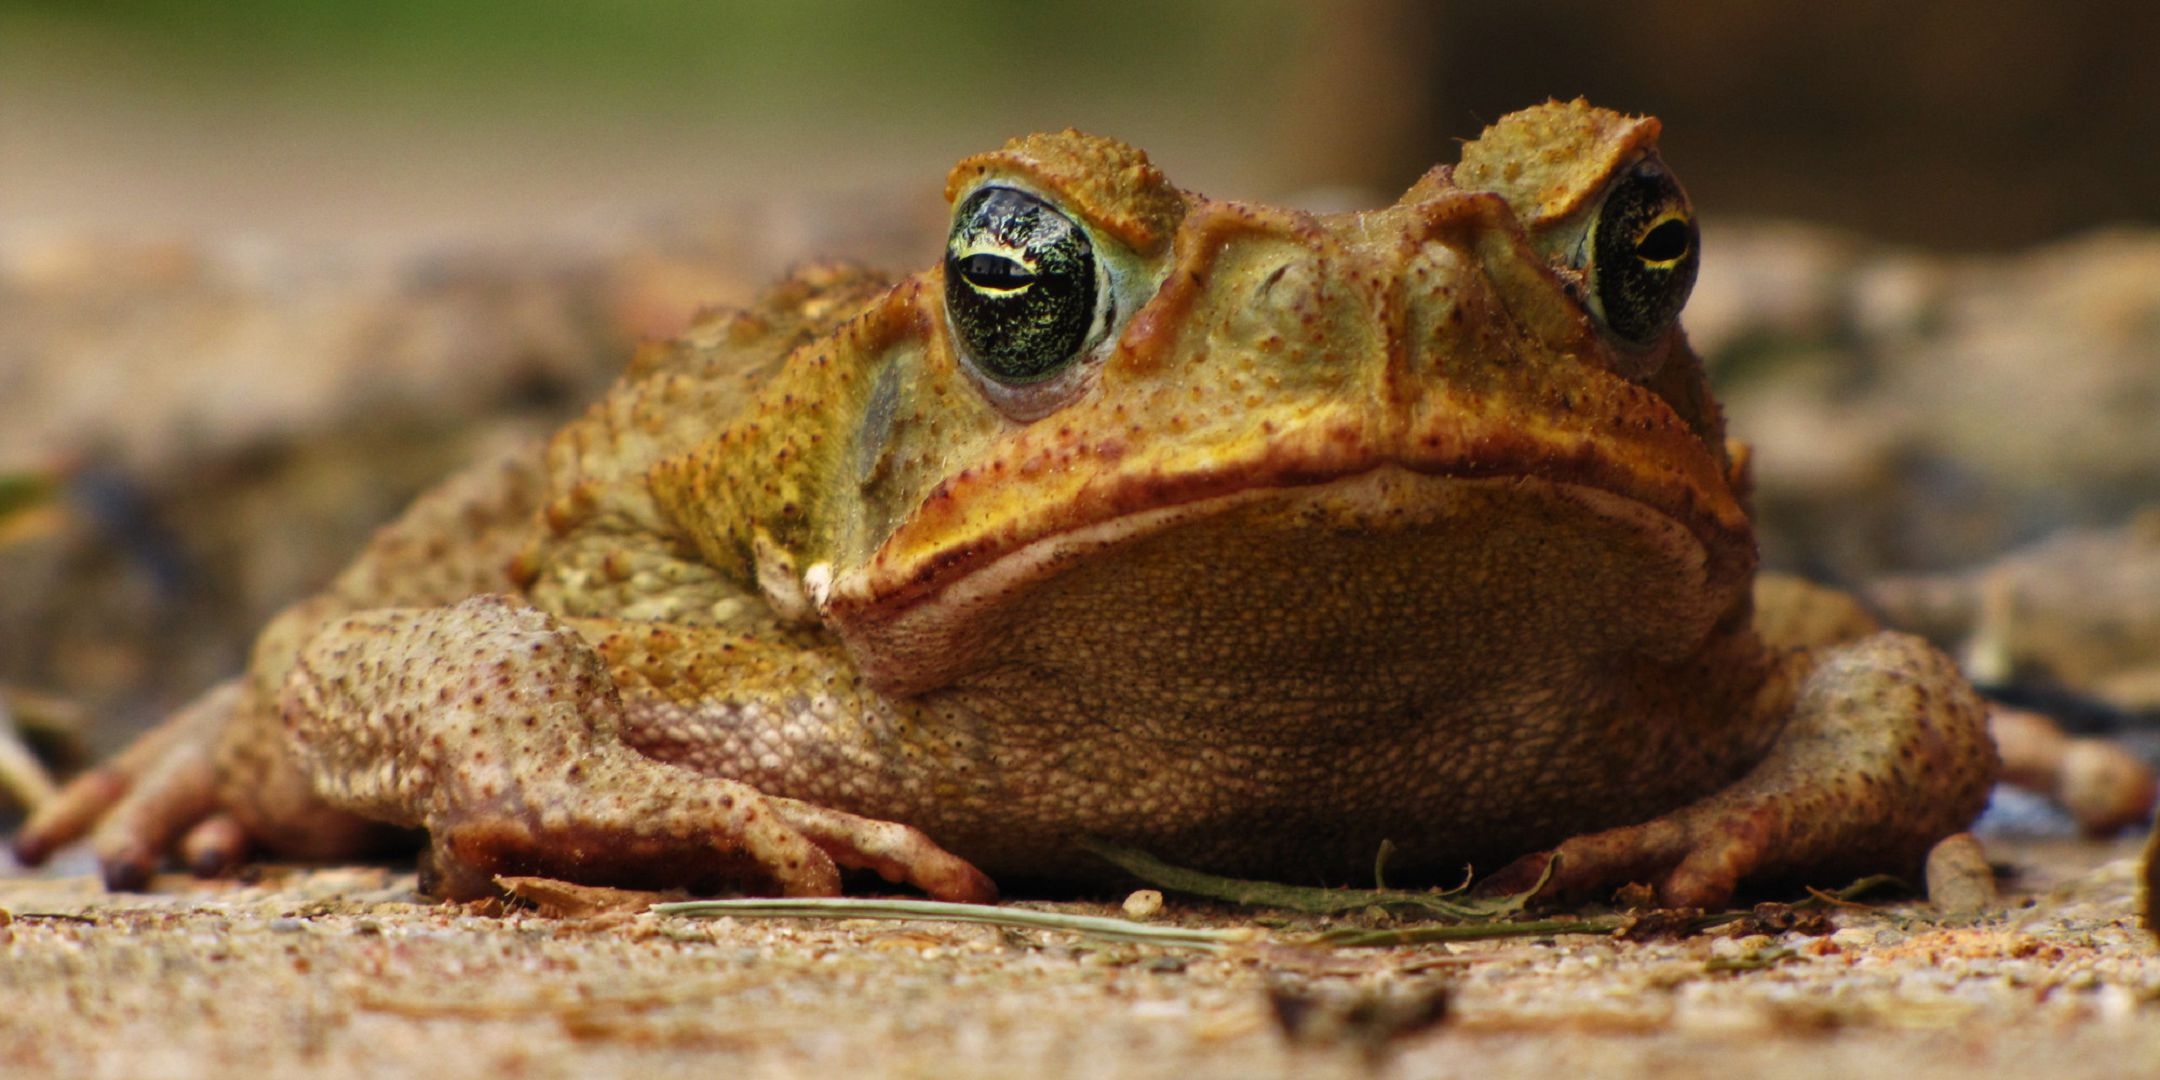 Cane toad, Amphibious creature, Desktop background, Animal species, 2160x1080 Dual Screen Desktop